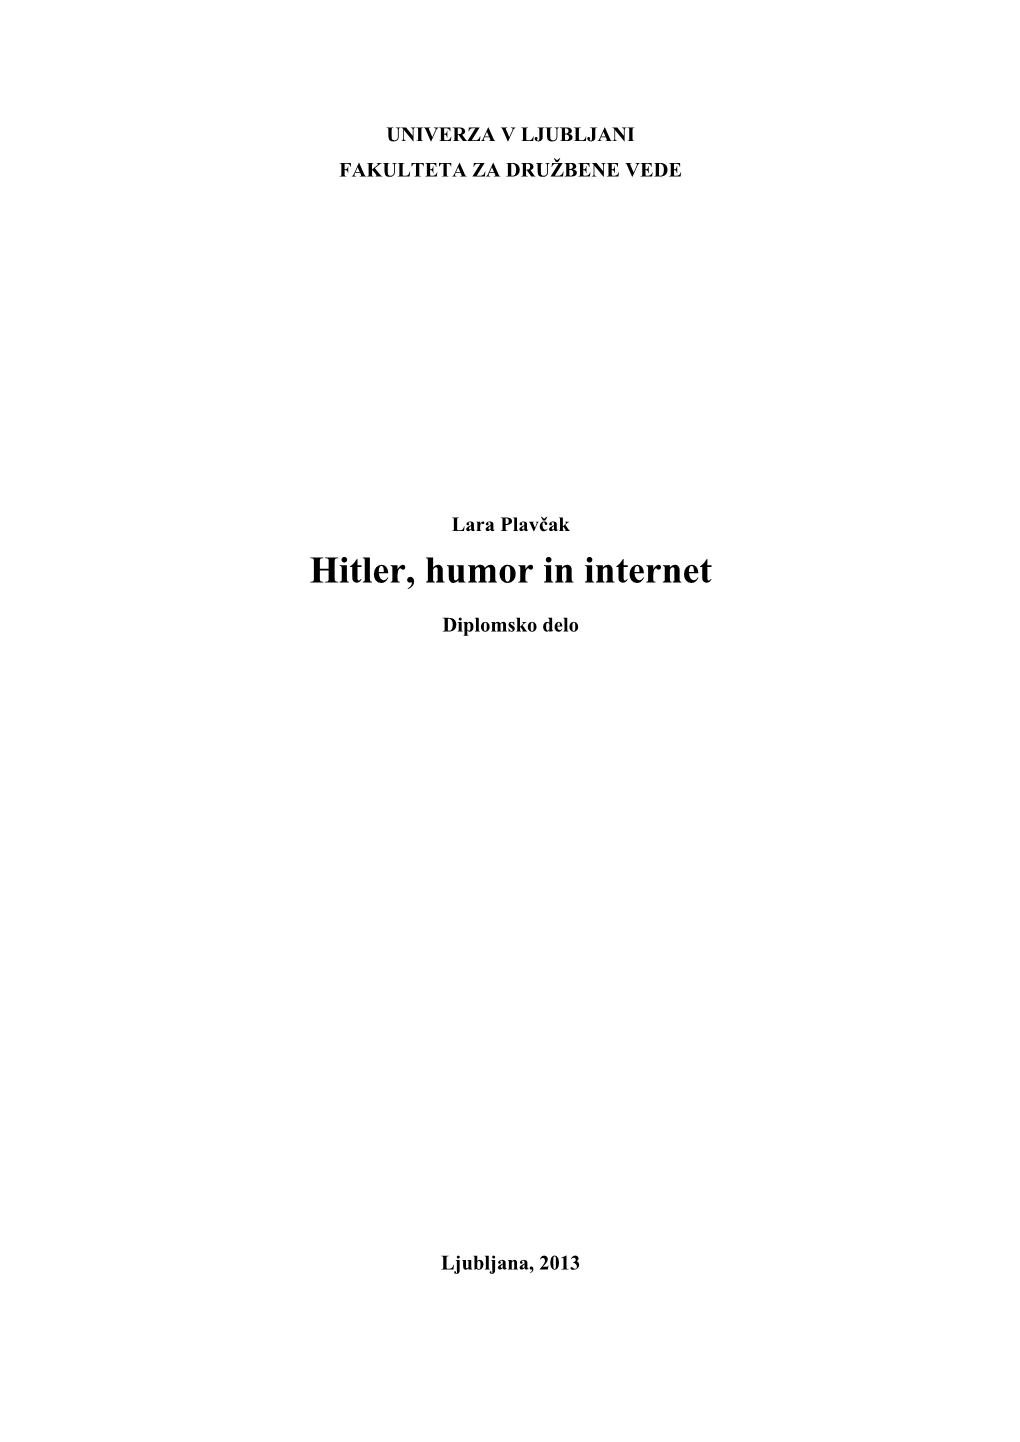 Hitler, Humor in Internet